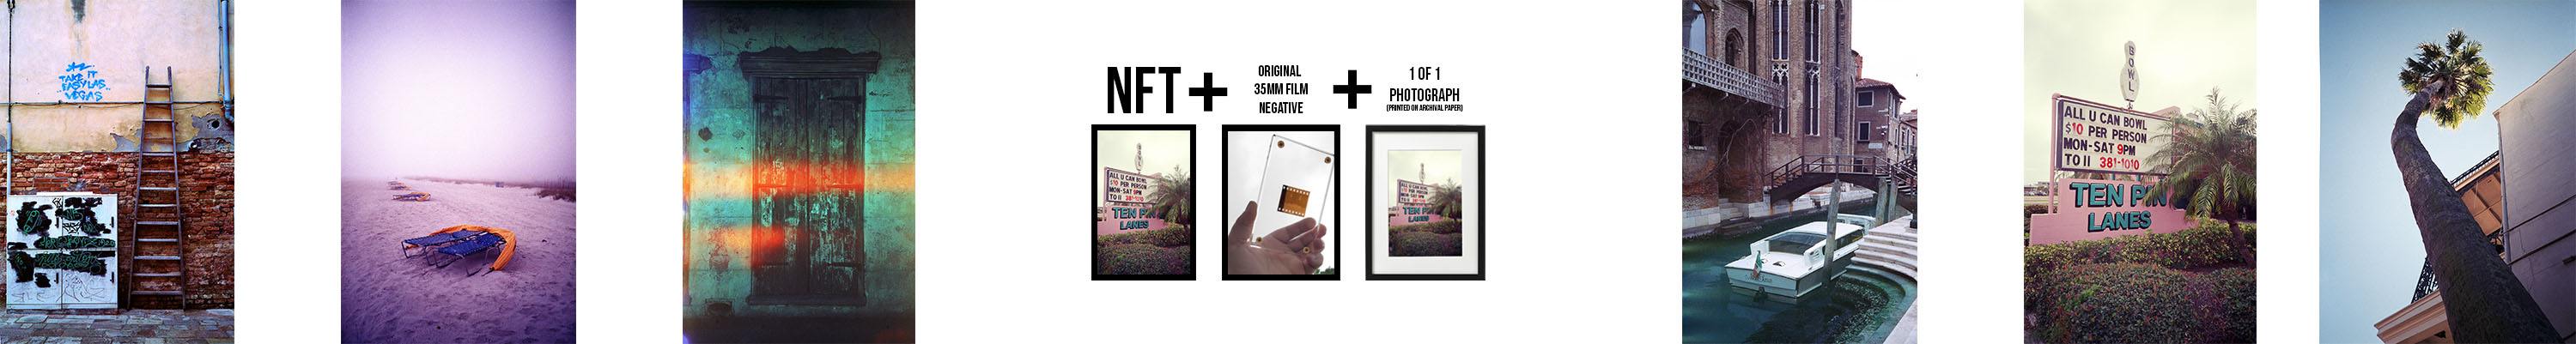 NFT + Original 35mm Negative + Archival Photographic Print